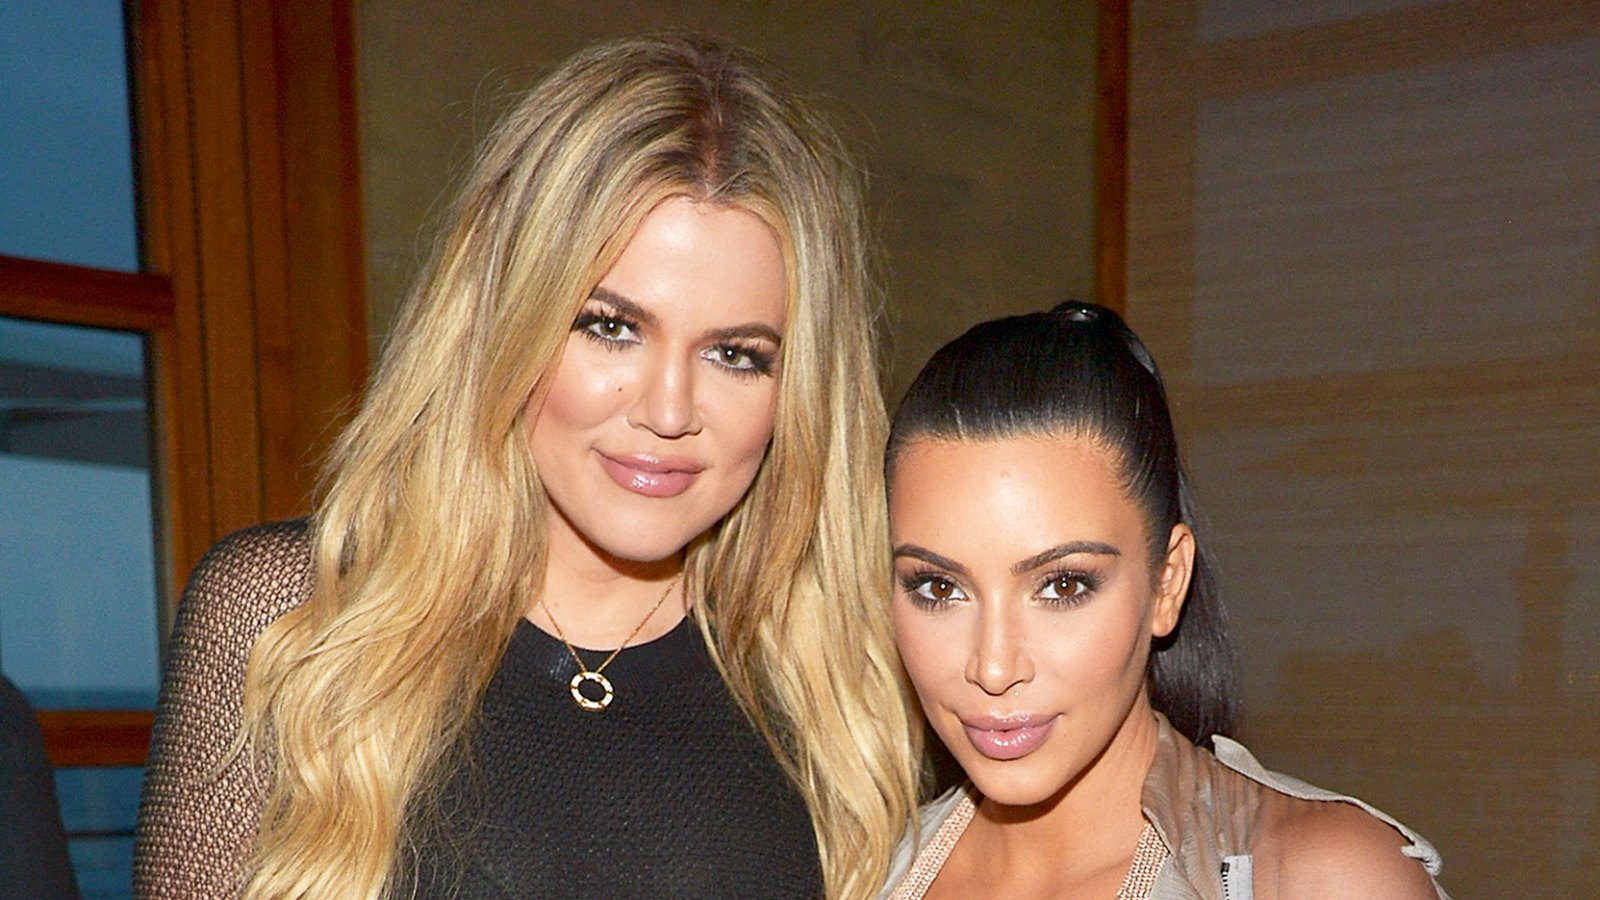 Khloe Kardashian and Kim Kardashian attend the dinner and preview of their new 2015 apps launching soon at Nobu Malibu in Malibu, California.